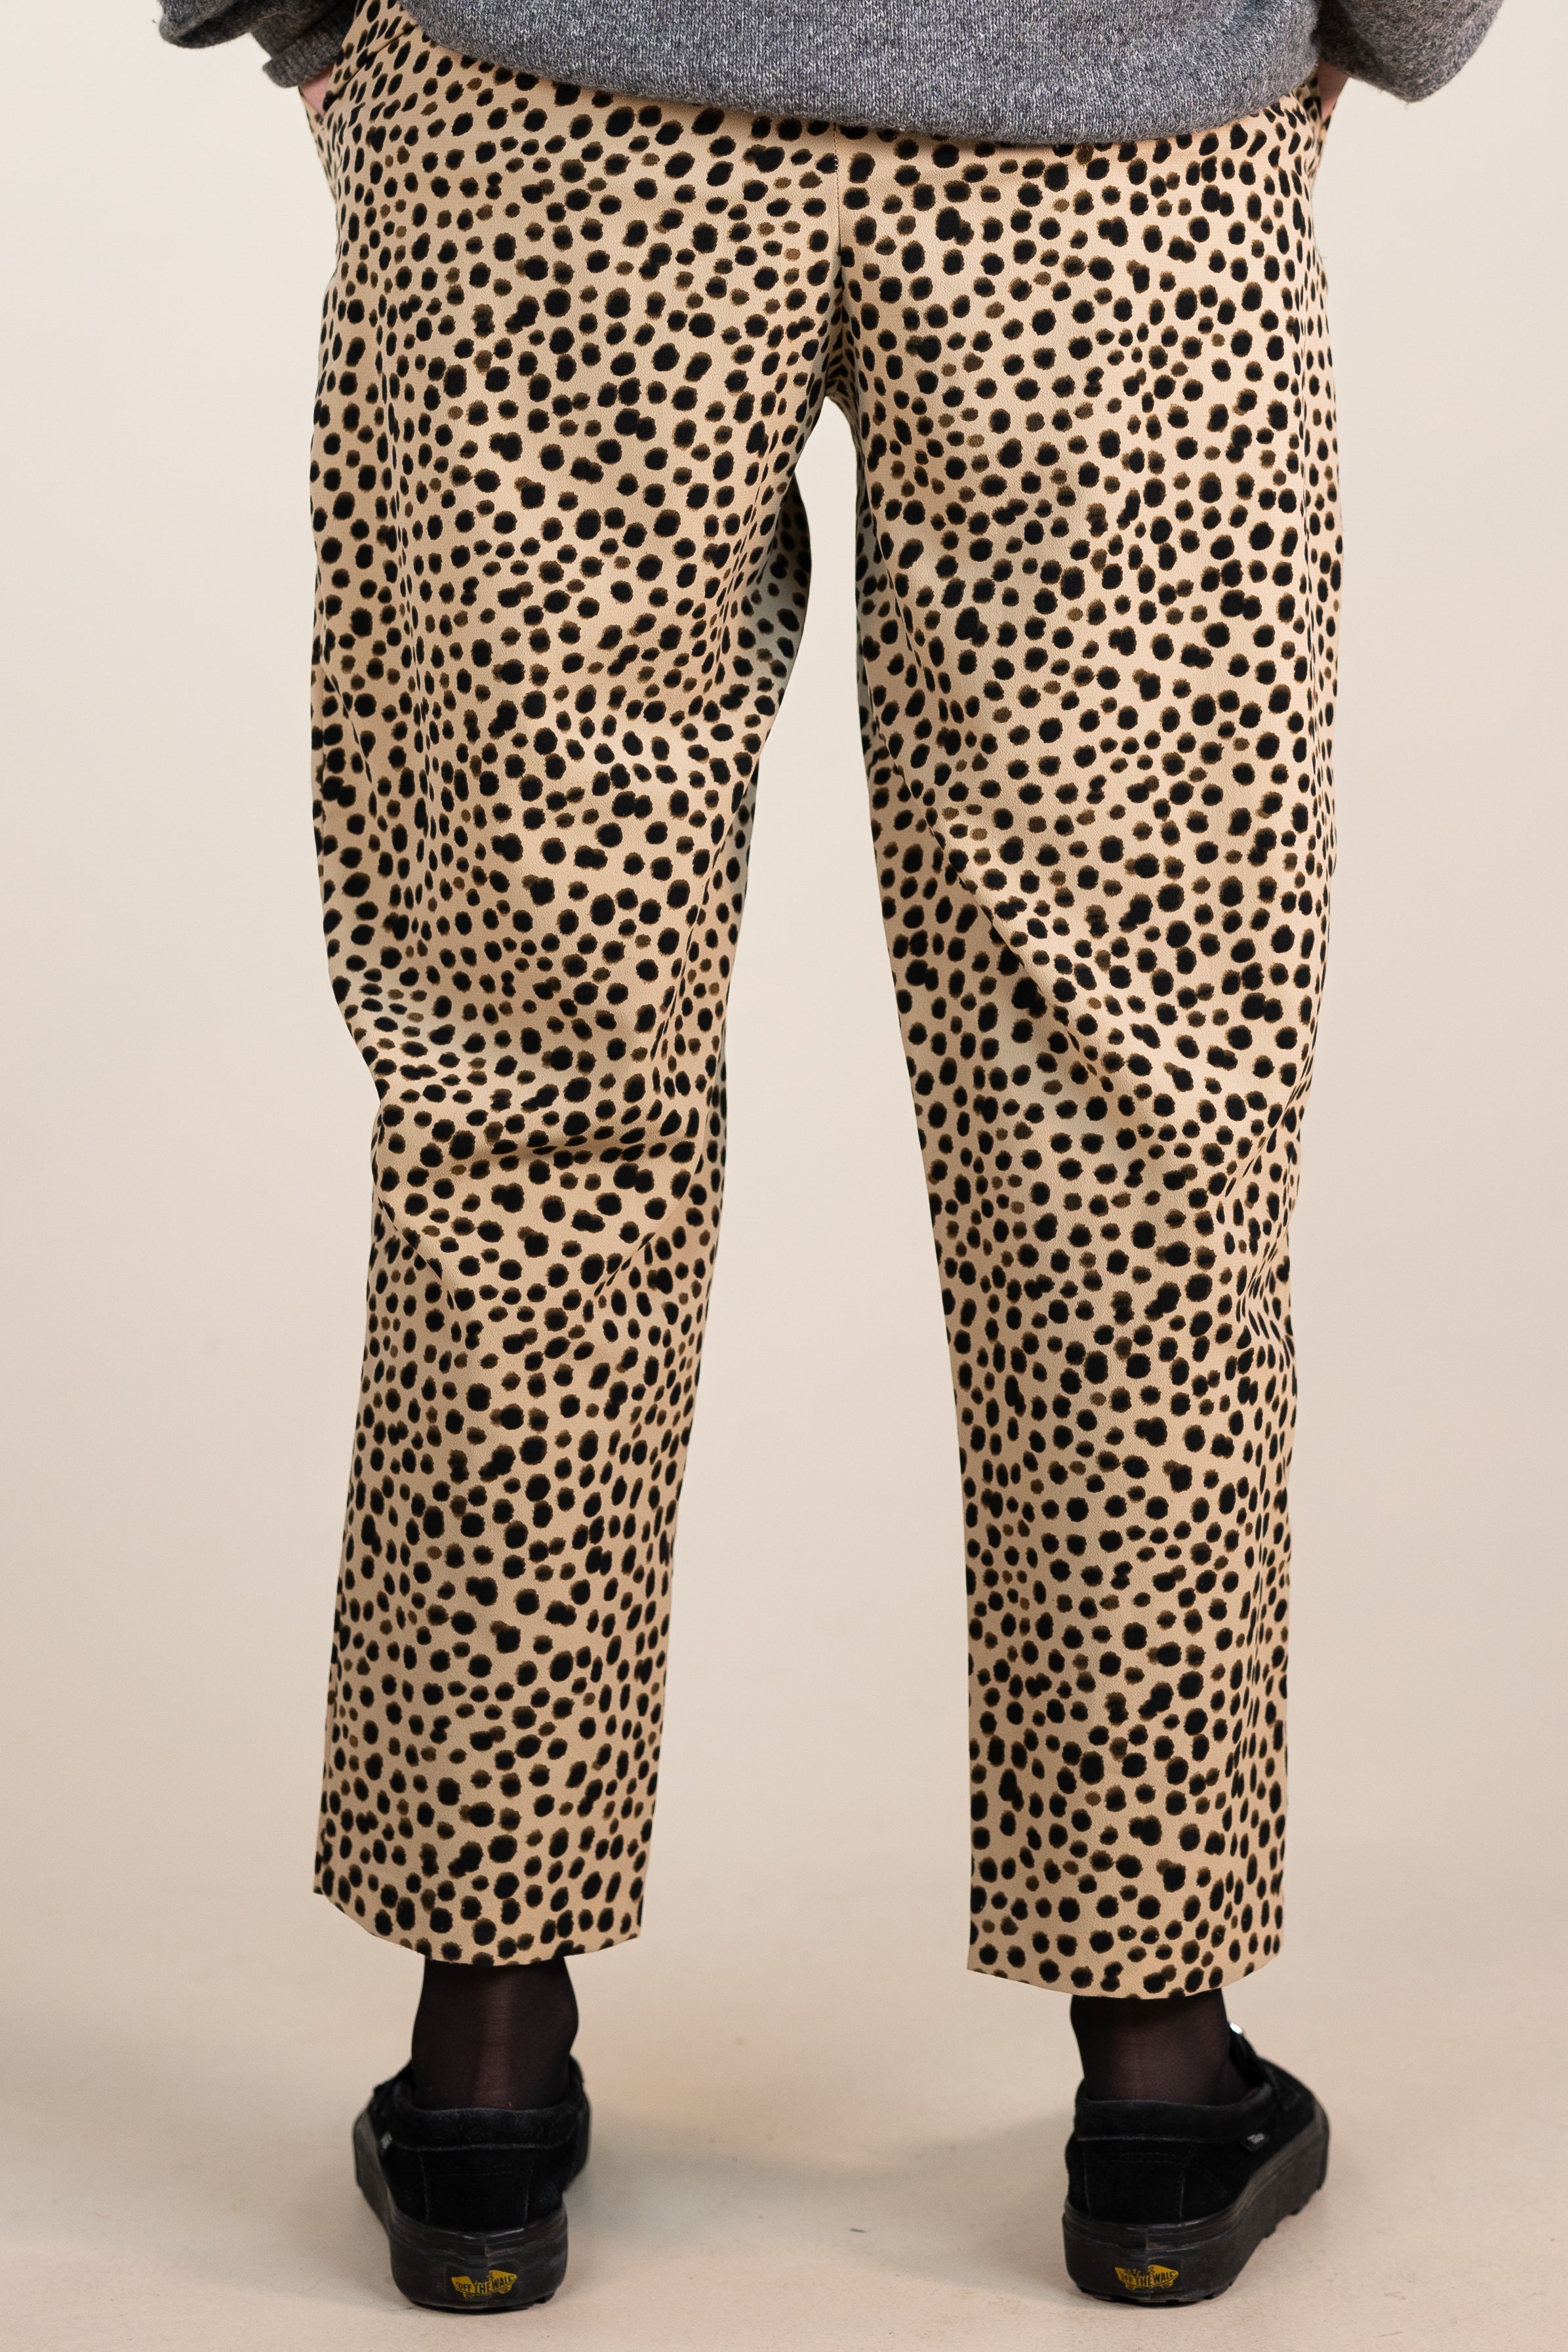 Leopard Print Trousers